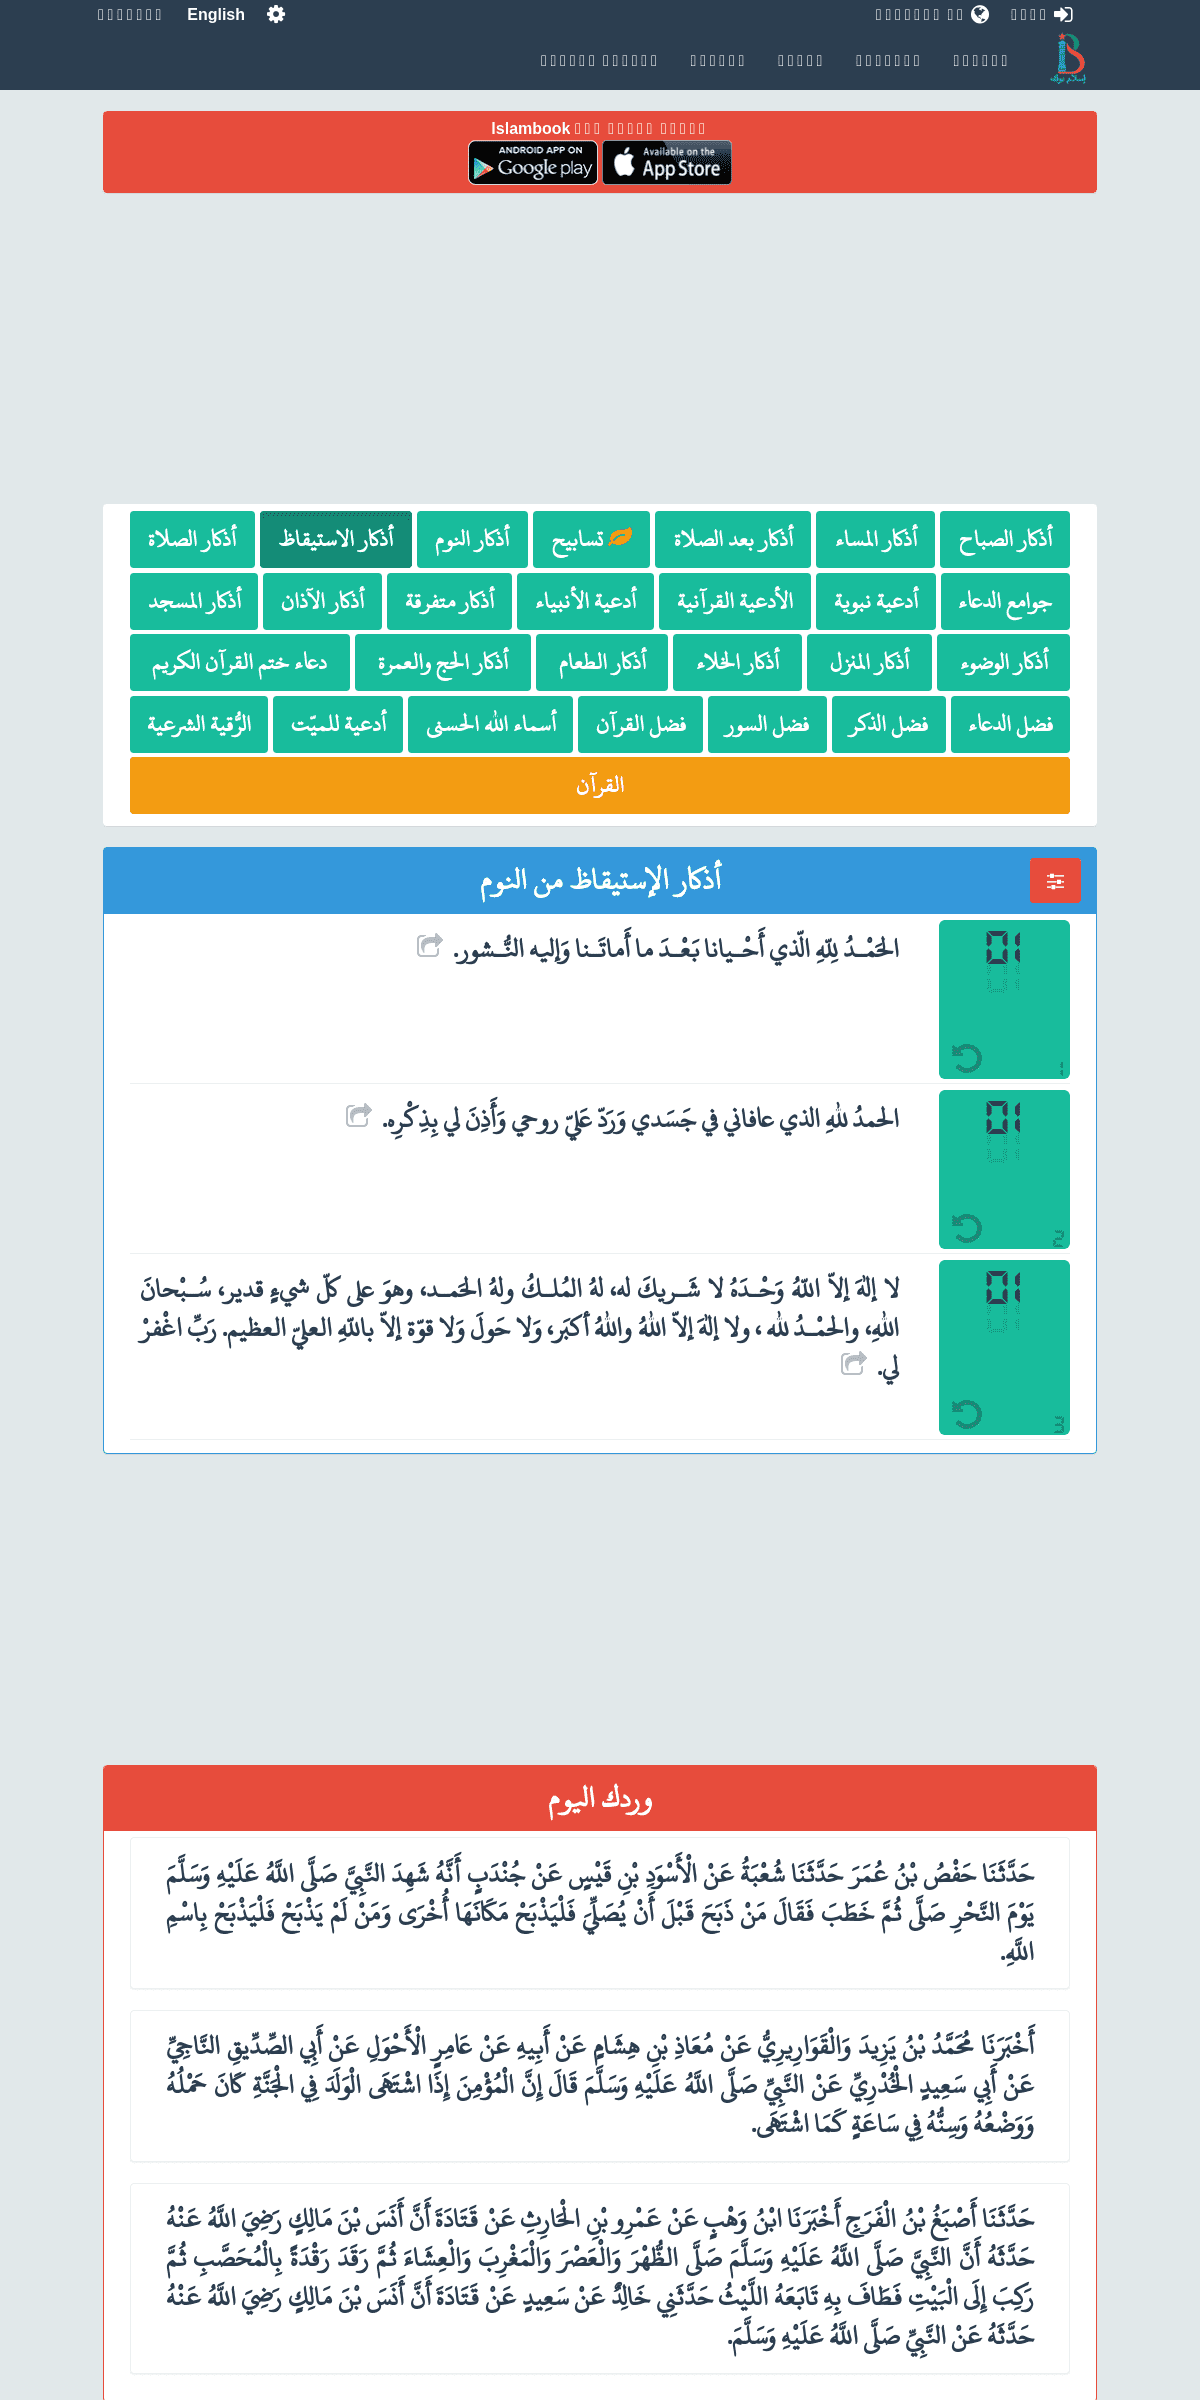 A complete backup of islambook.com